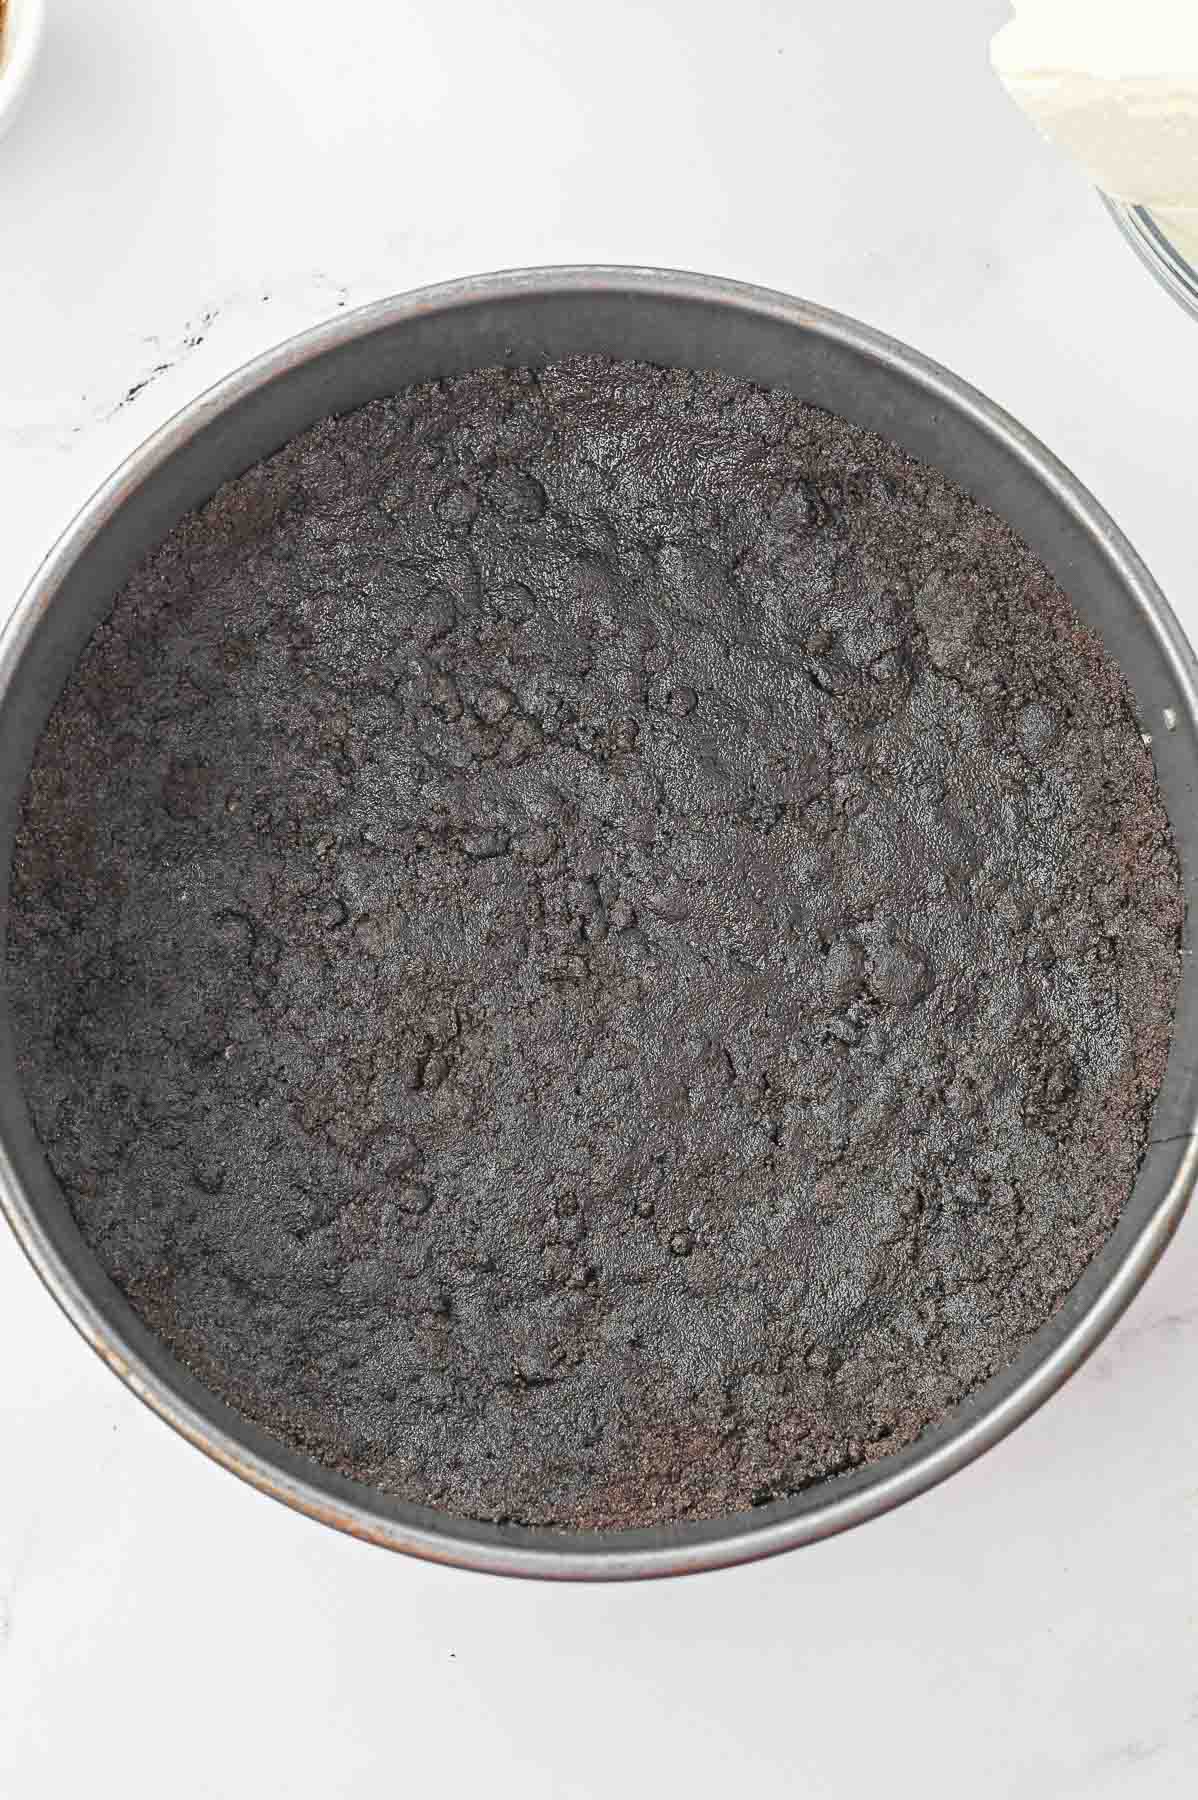 Oreo cookie crumb mixture pressed on bottom of cooking pan.